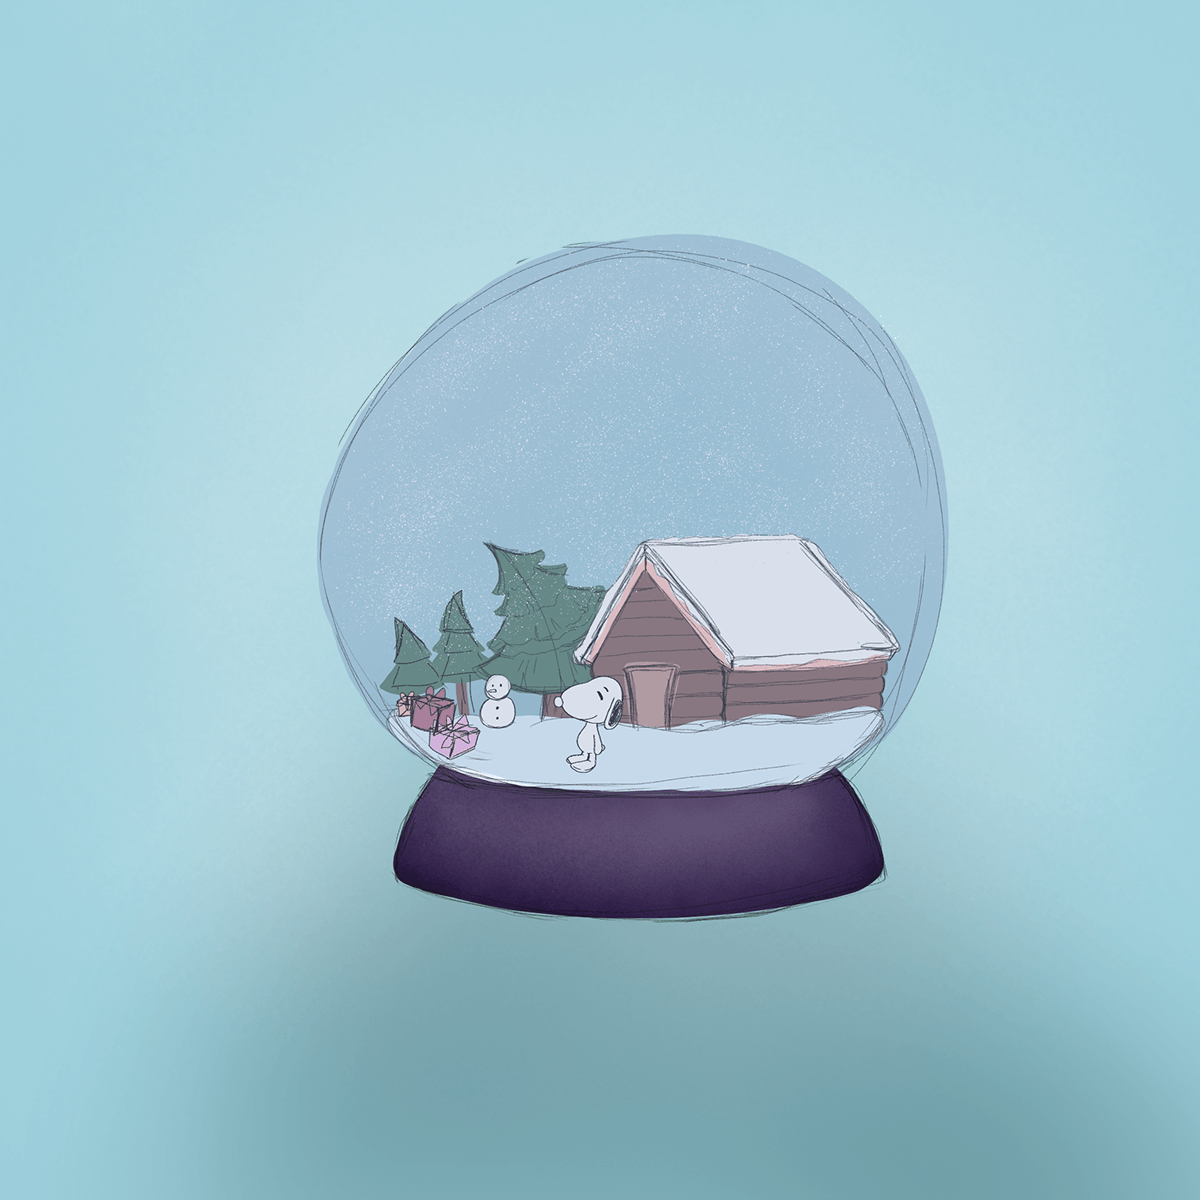 Christmas snowglobe 3D 3d modeling blender3d animation 